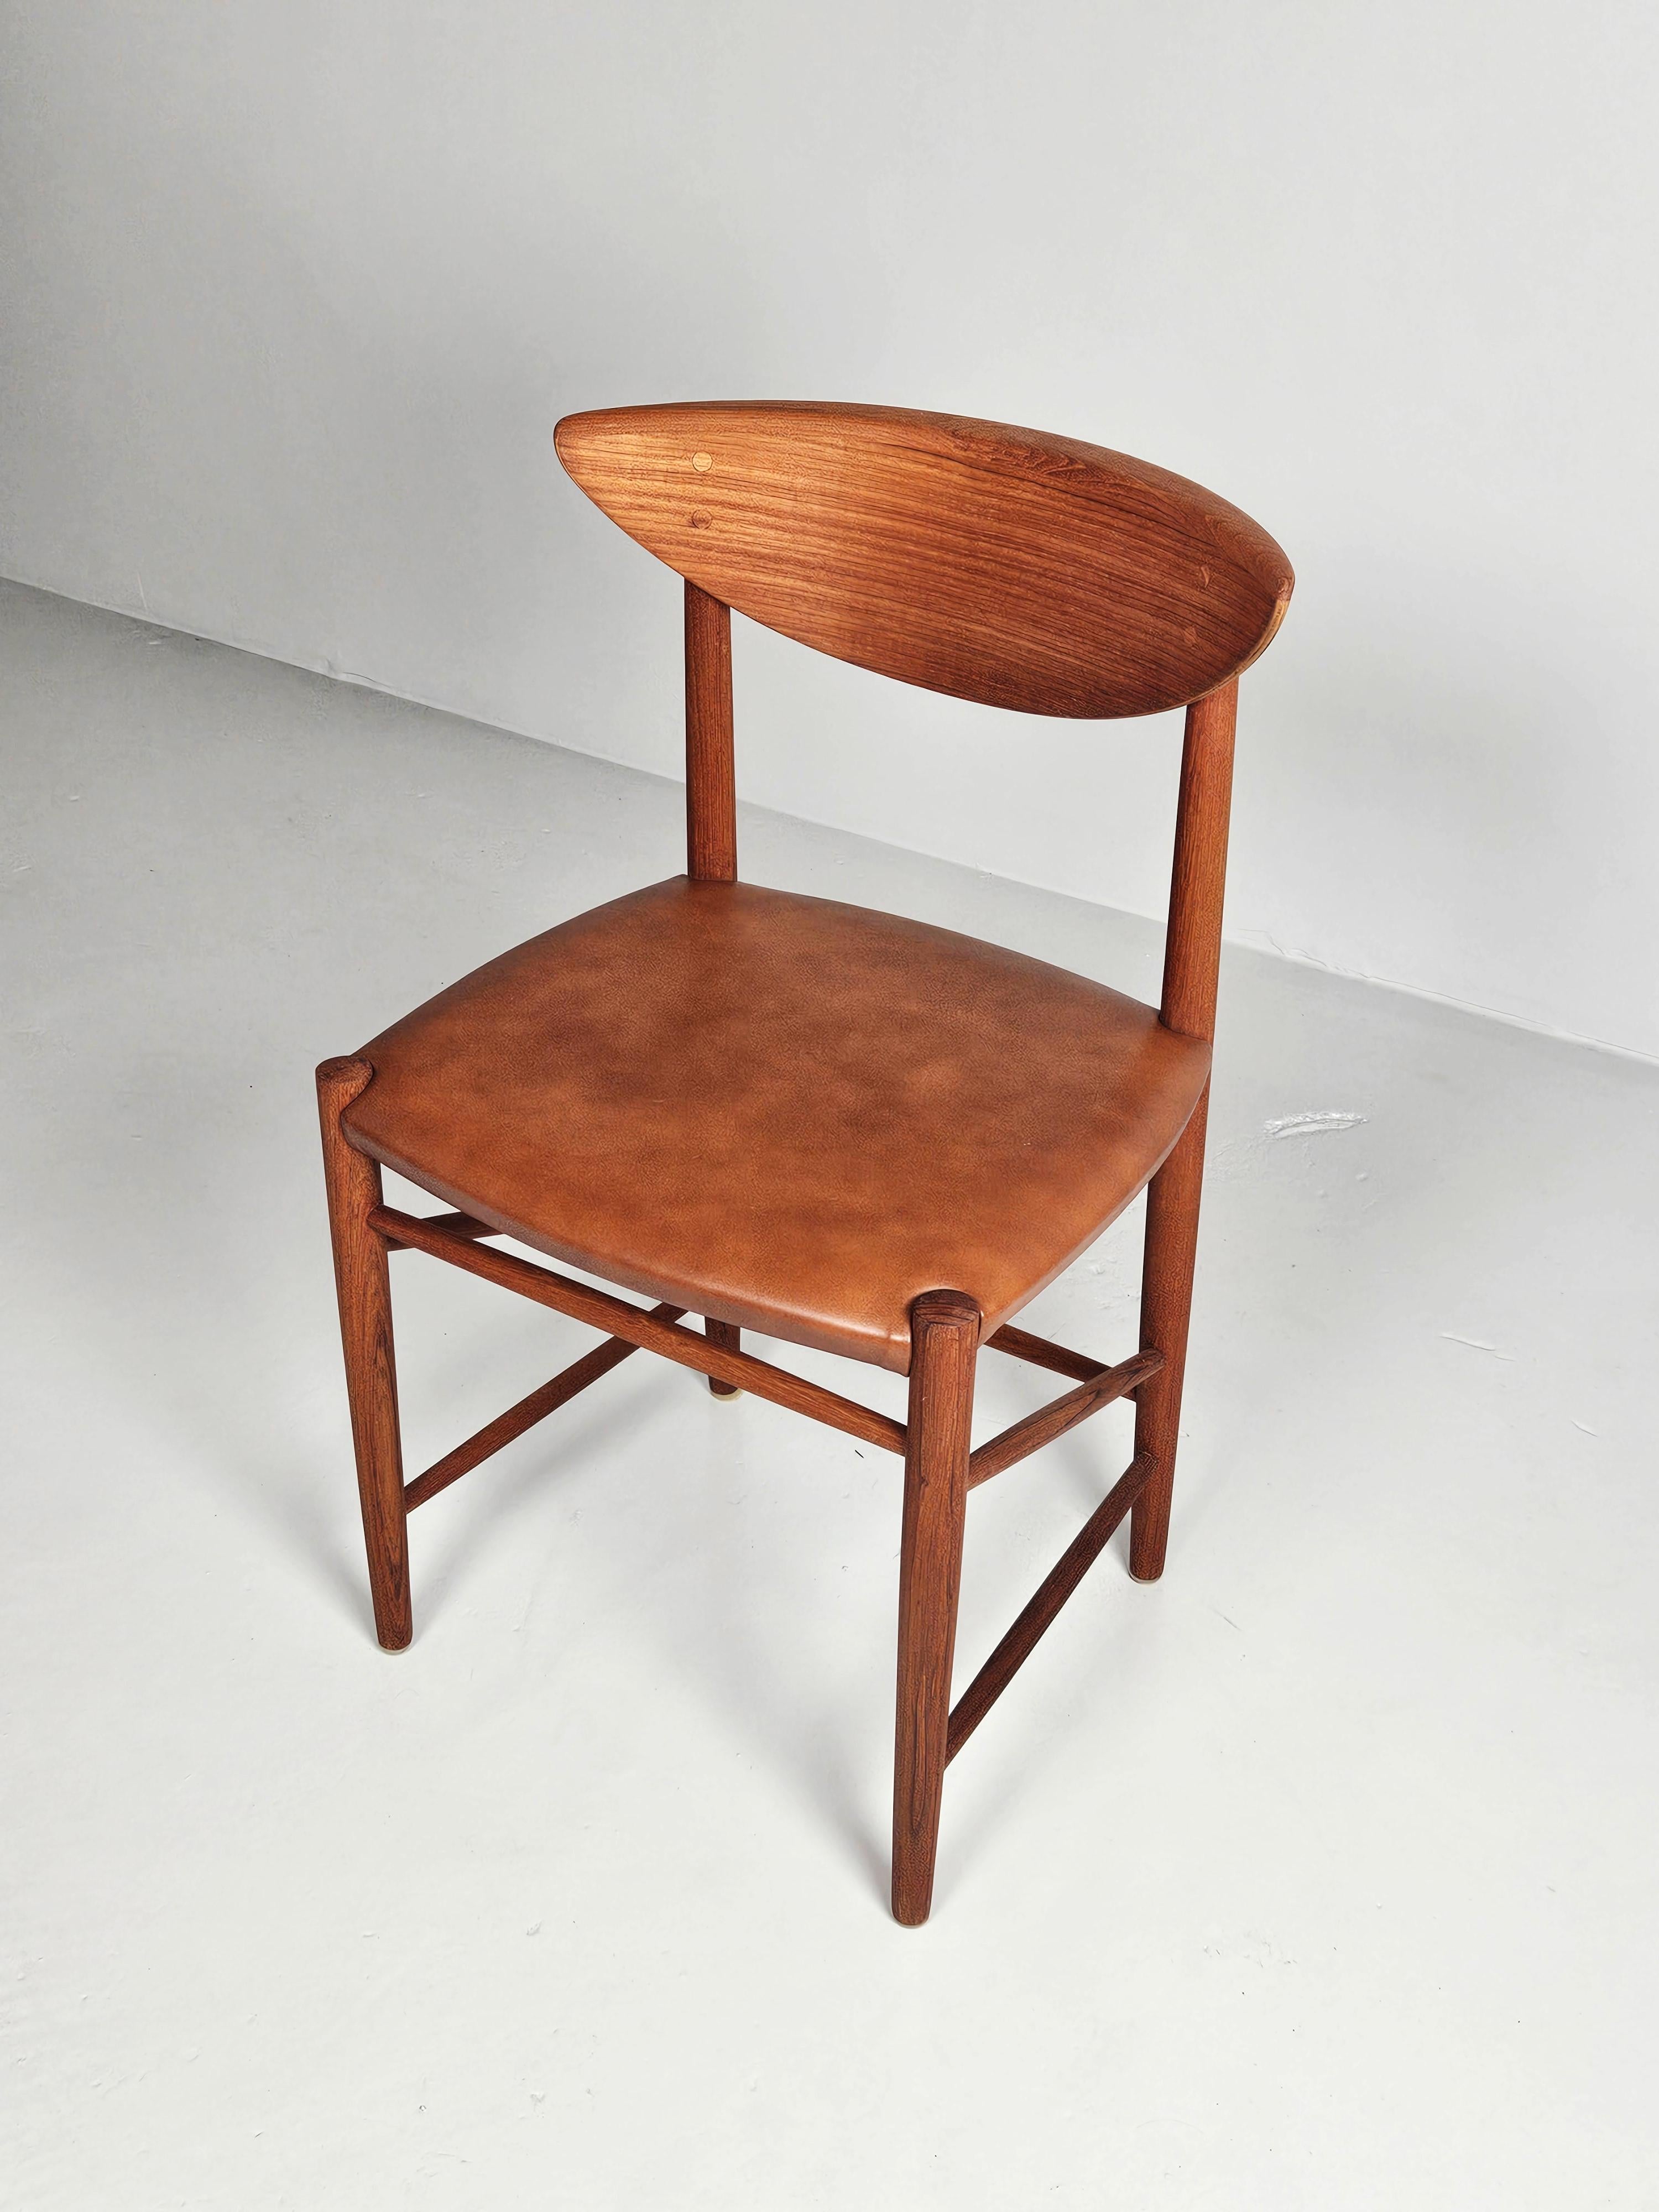 20th Century Scandinavian modern dining chair by Peter Hvidt, Denmark, 1950s For Sale